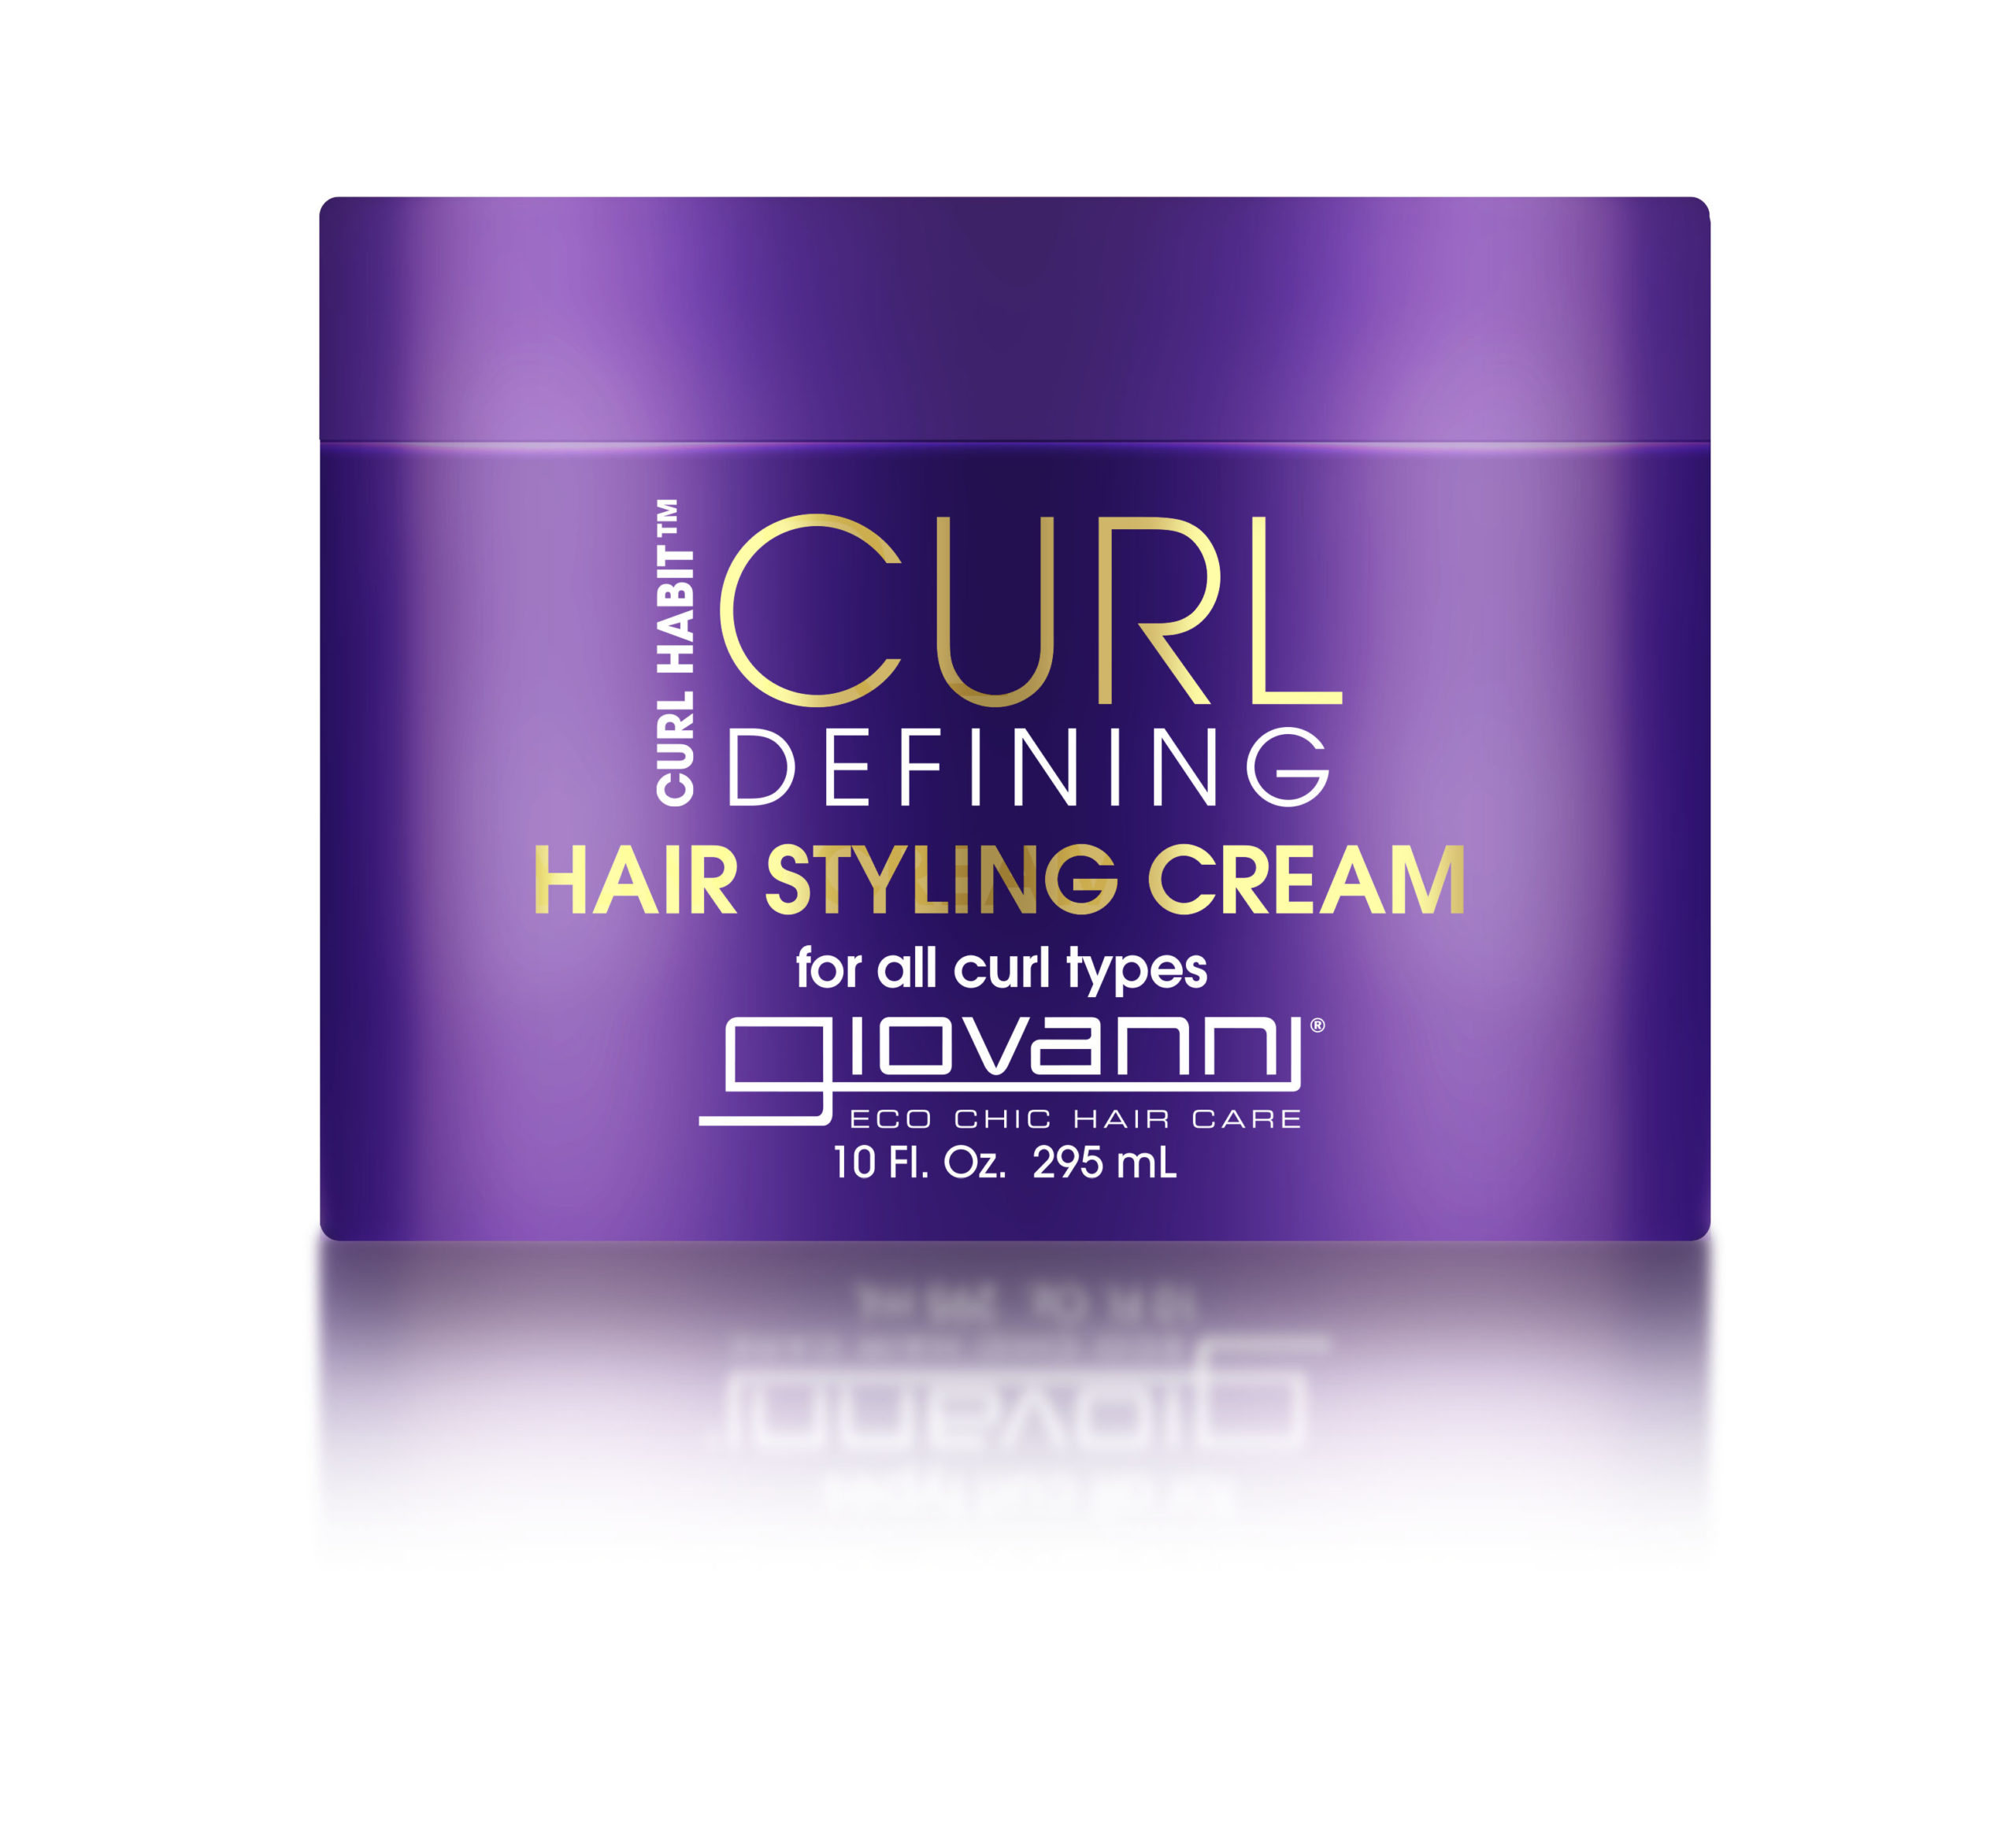 Giovanni Cosmetics Curl Hair Styling & Defining Cream